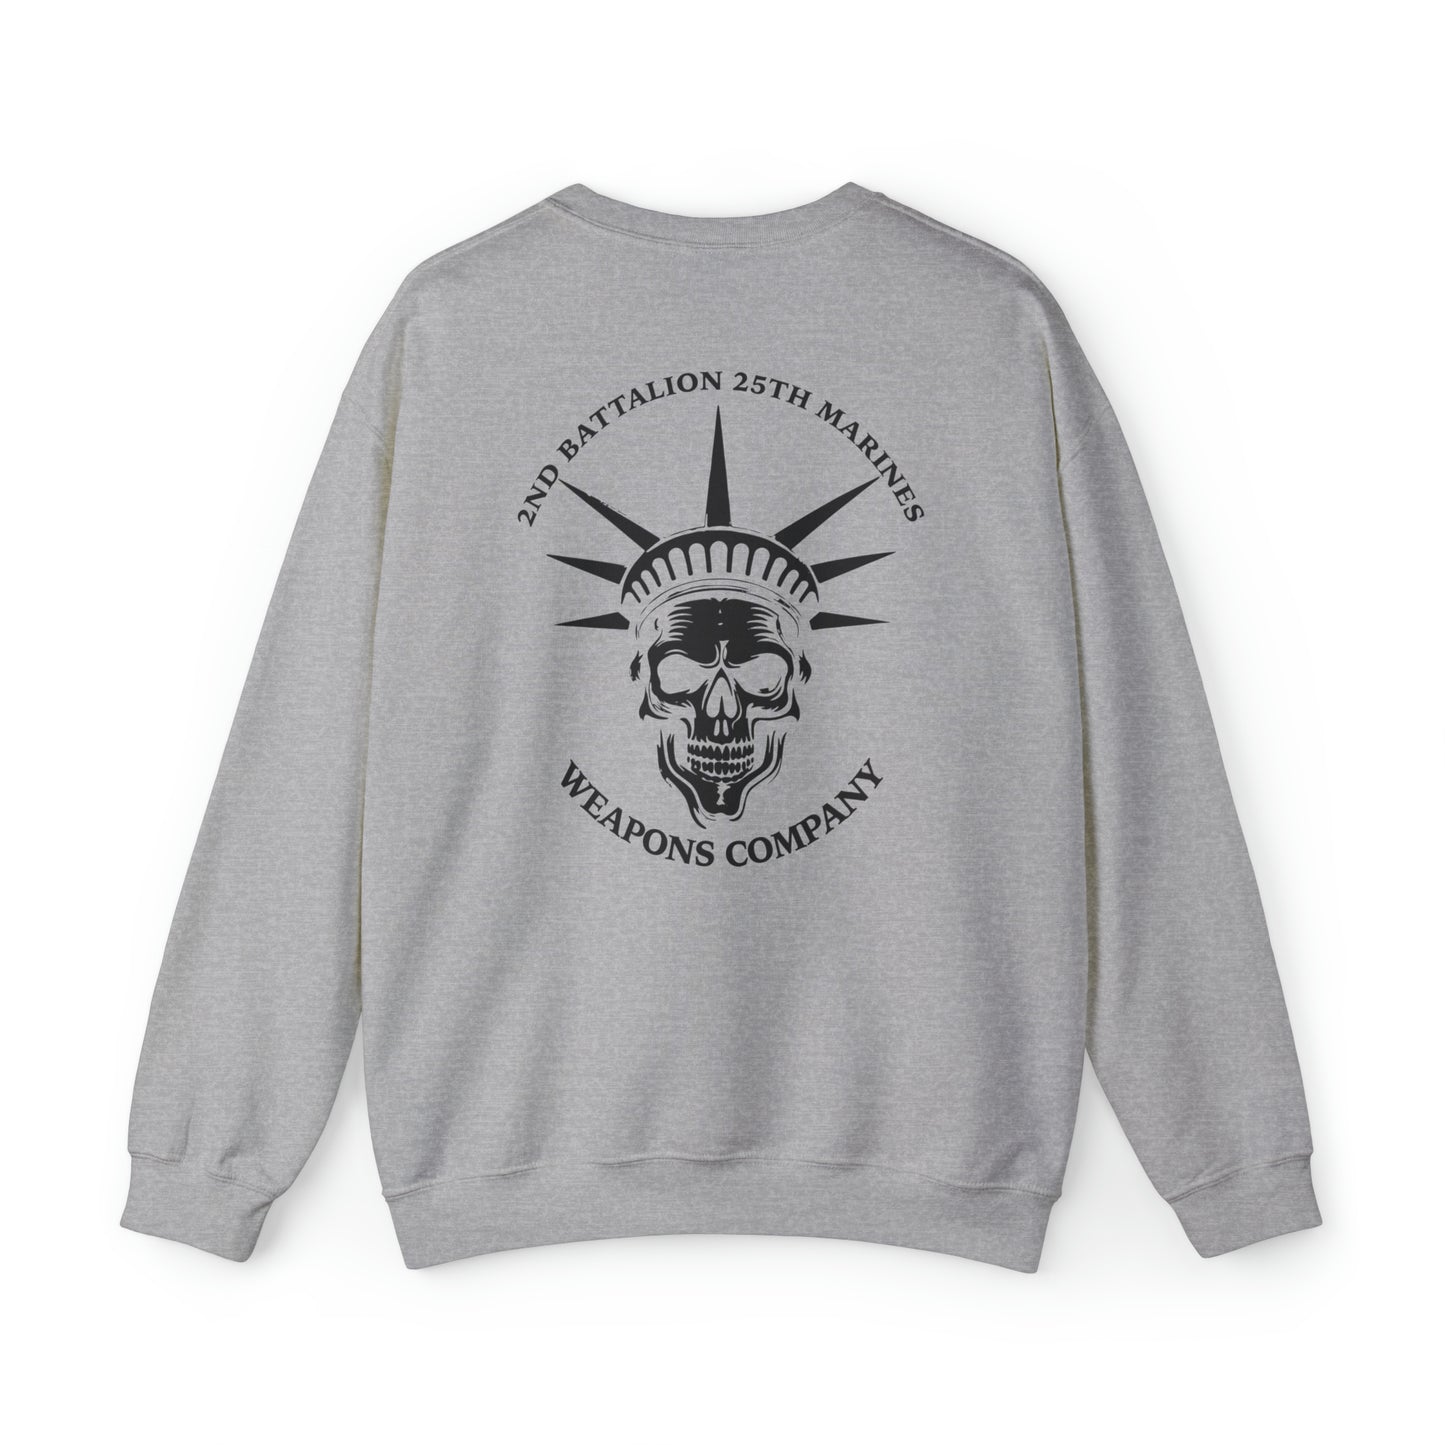 2/25 Weapons Company Sweatshirt